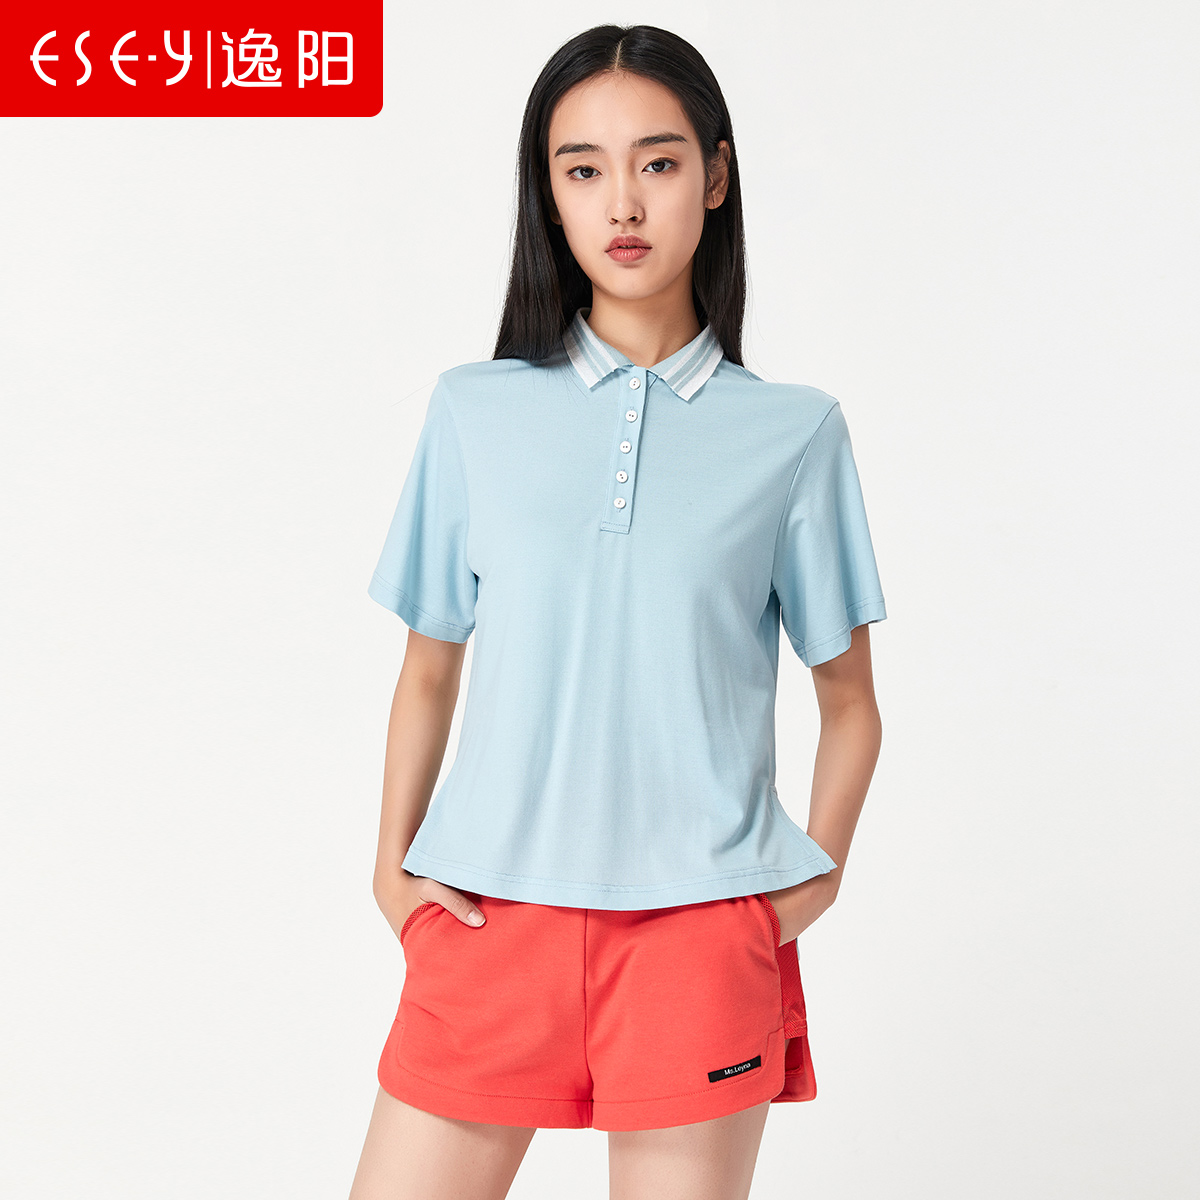 Yiyang women's summer new T-shirt women's short sleeve shirt polo shirt slim Korean version of the dress summer clothes